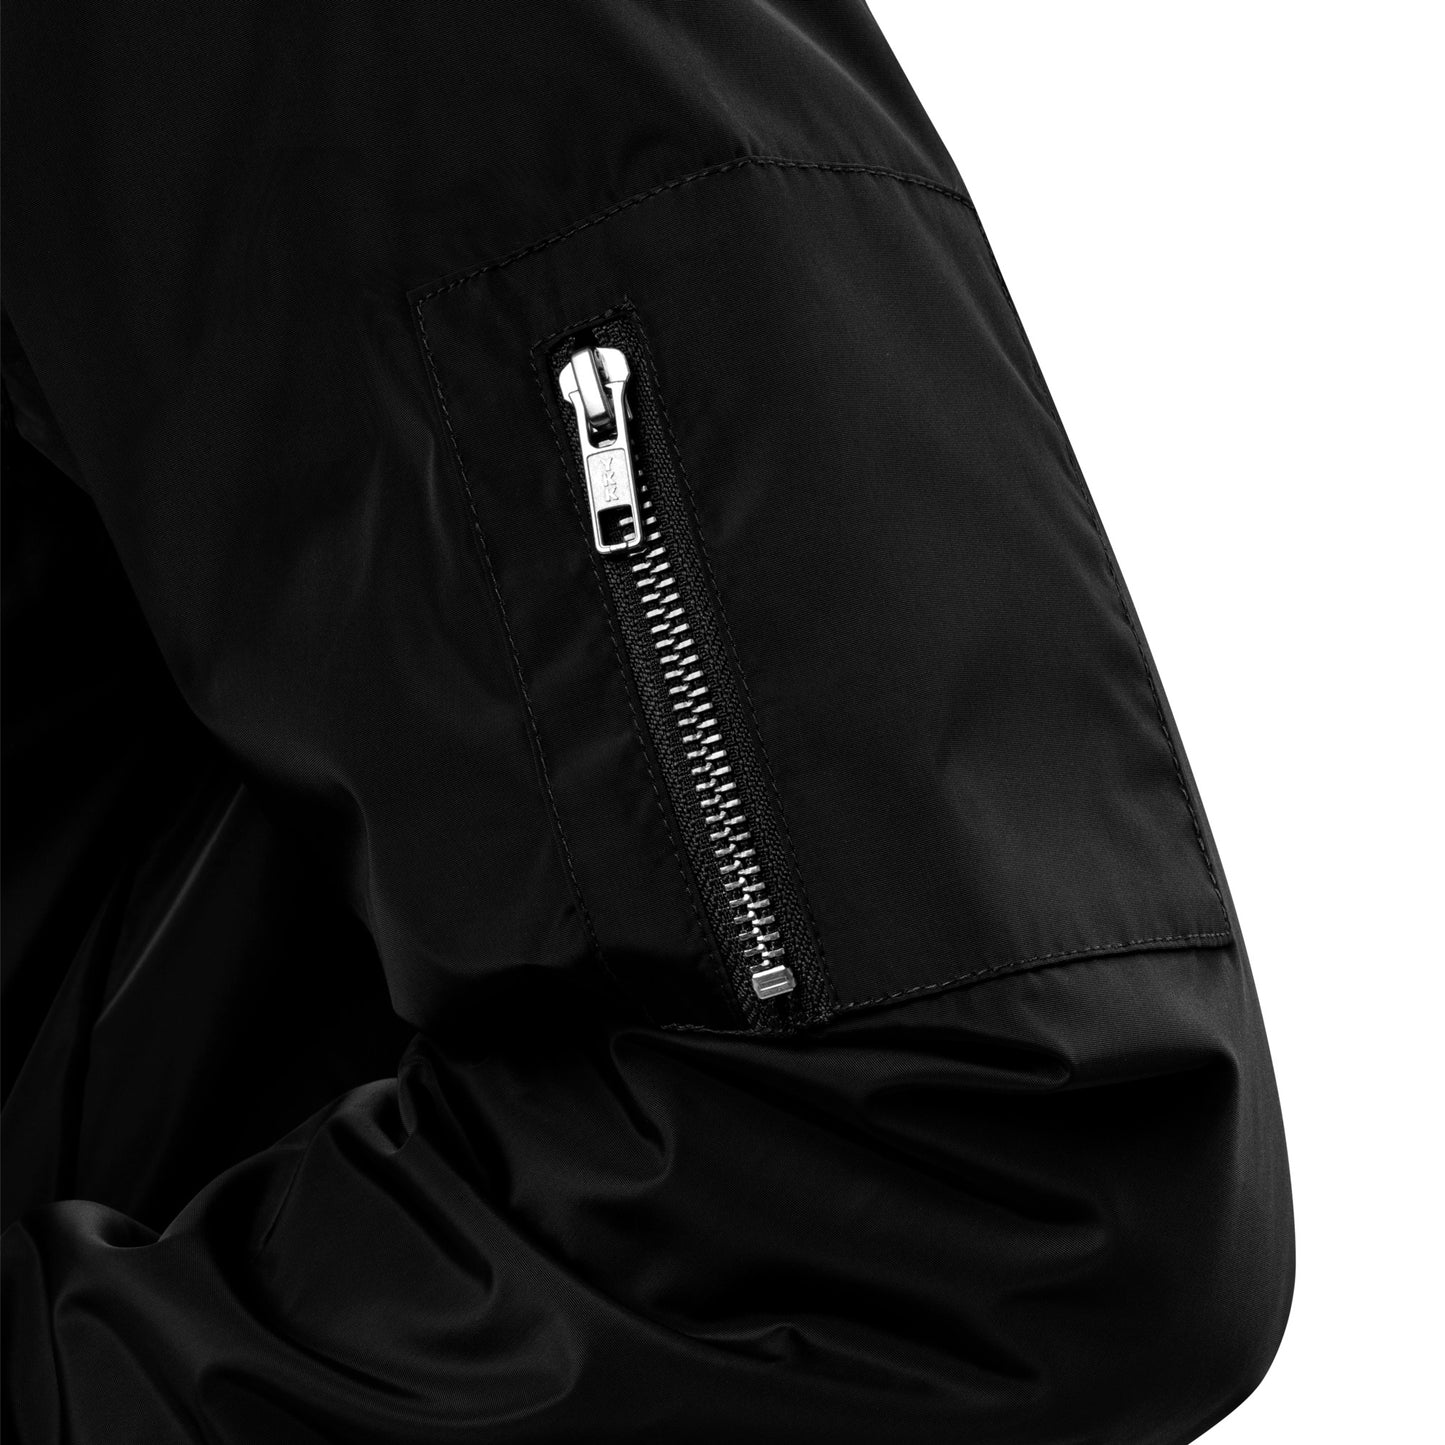 GIFTED Premium Bomber Jacket